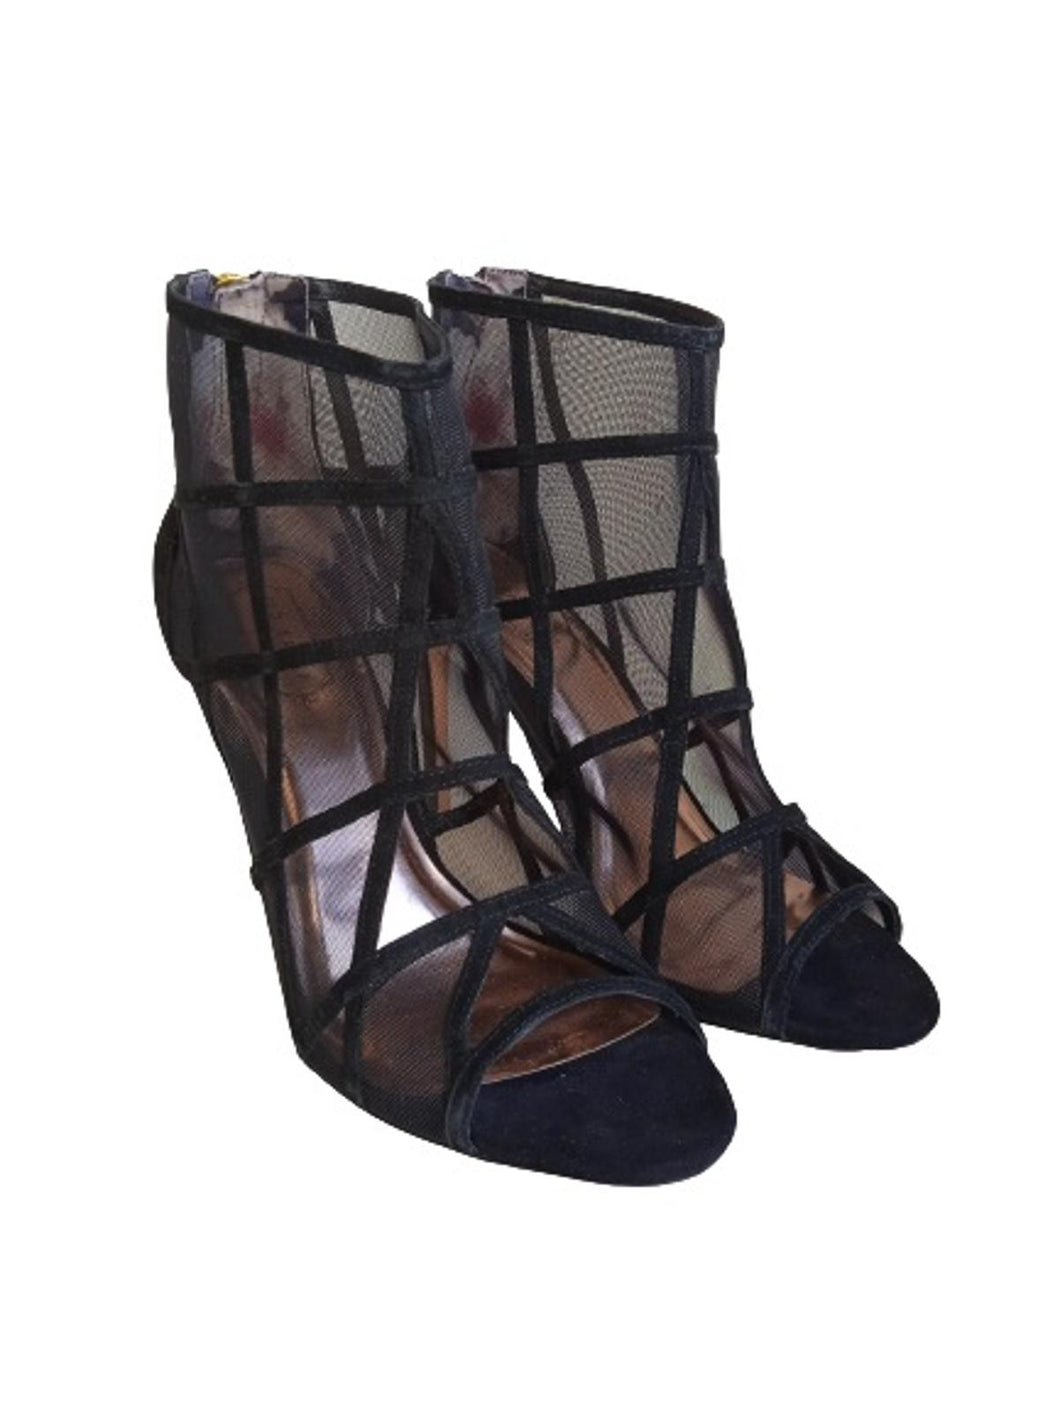 TED BAKER Ladies Black Suede Sheer Panel Xstal Ankle Boots Size EU40 UK7